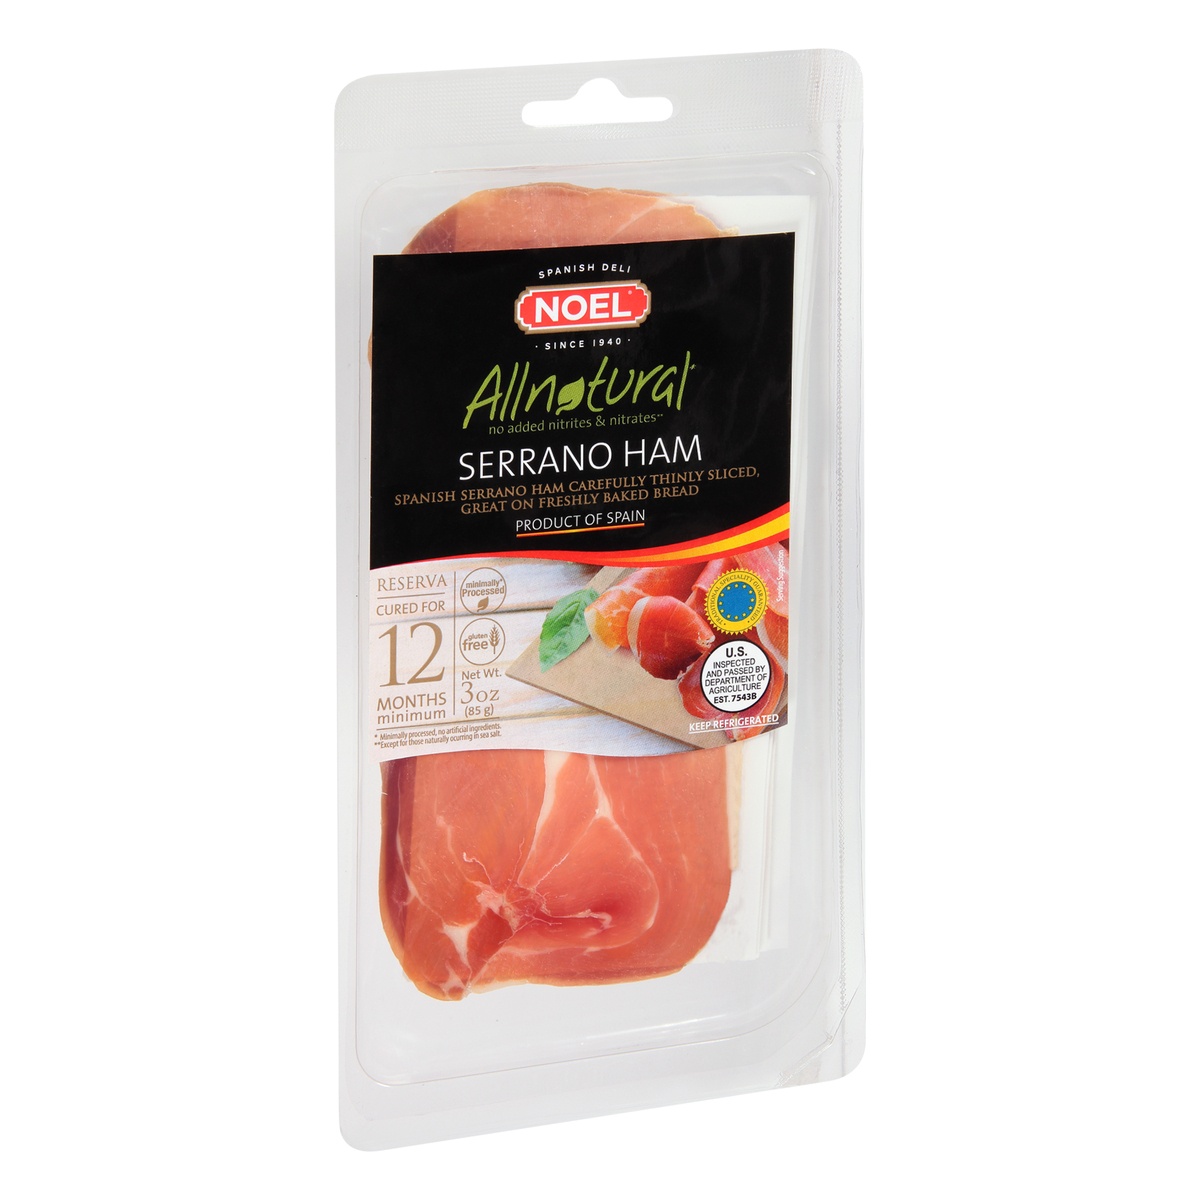 Noel All Natural Serrano Sliced Ham 3 oz | Shipt How Many Slices Of Ham Is 3 Oz